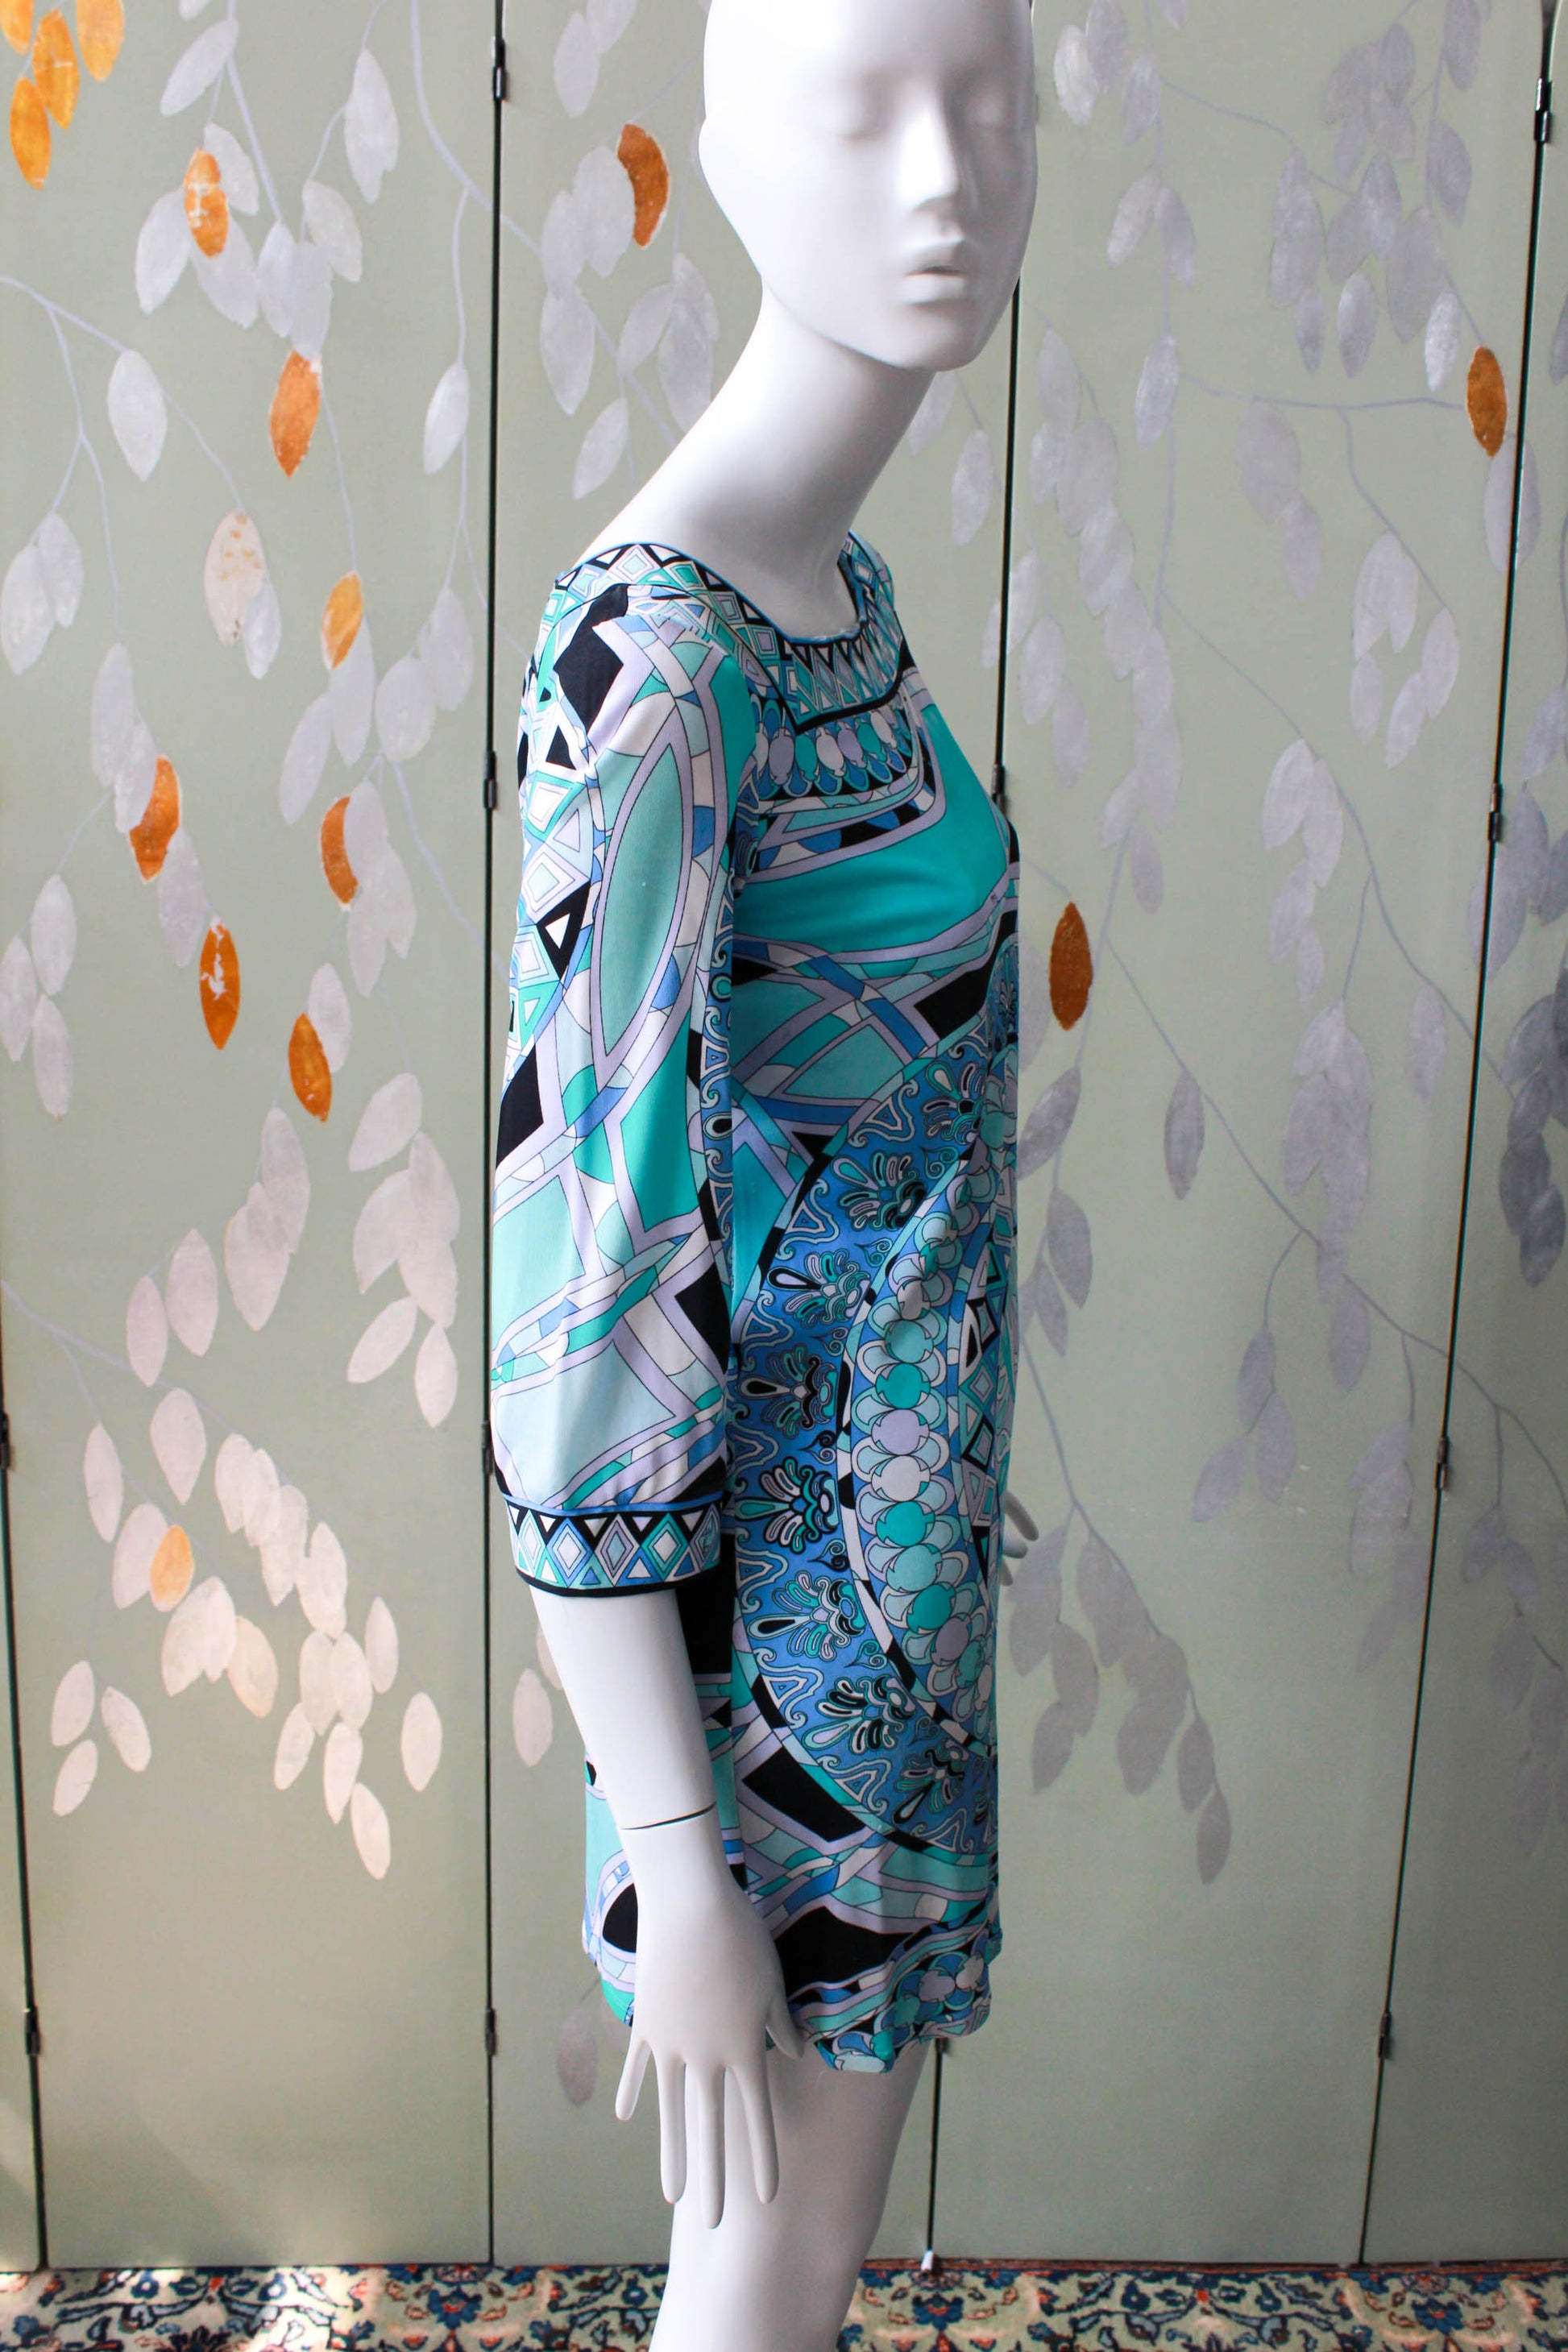 Emilio Pucci Patterned Silk Jersey Dress, Medium – Ian Drummond